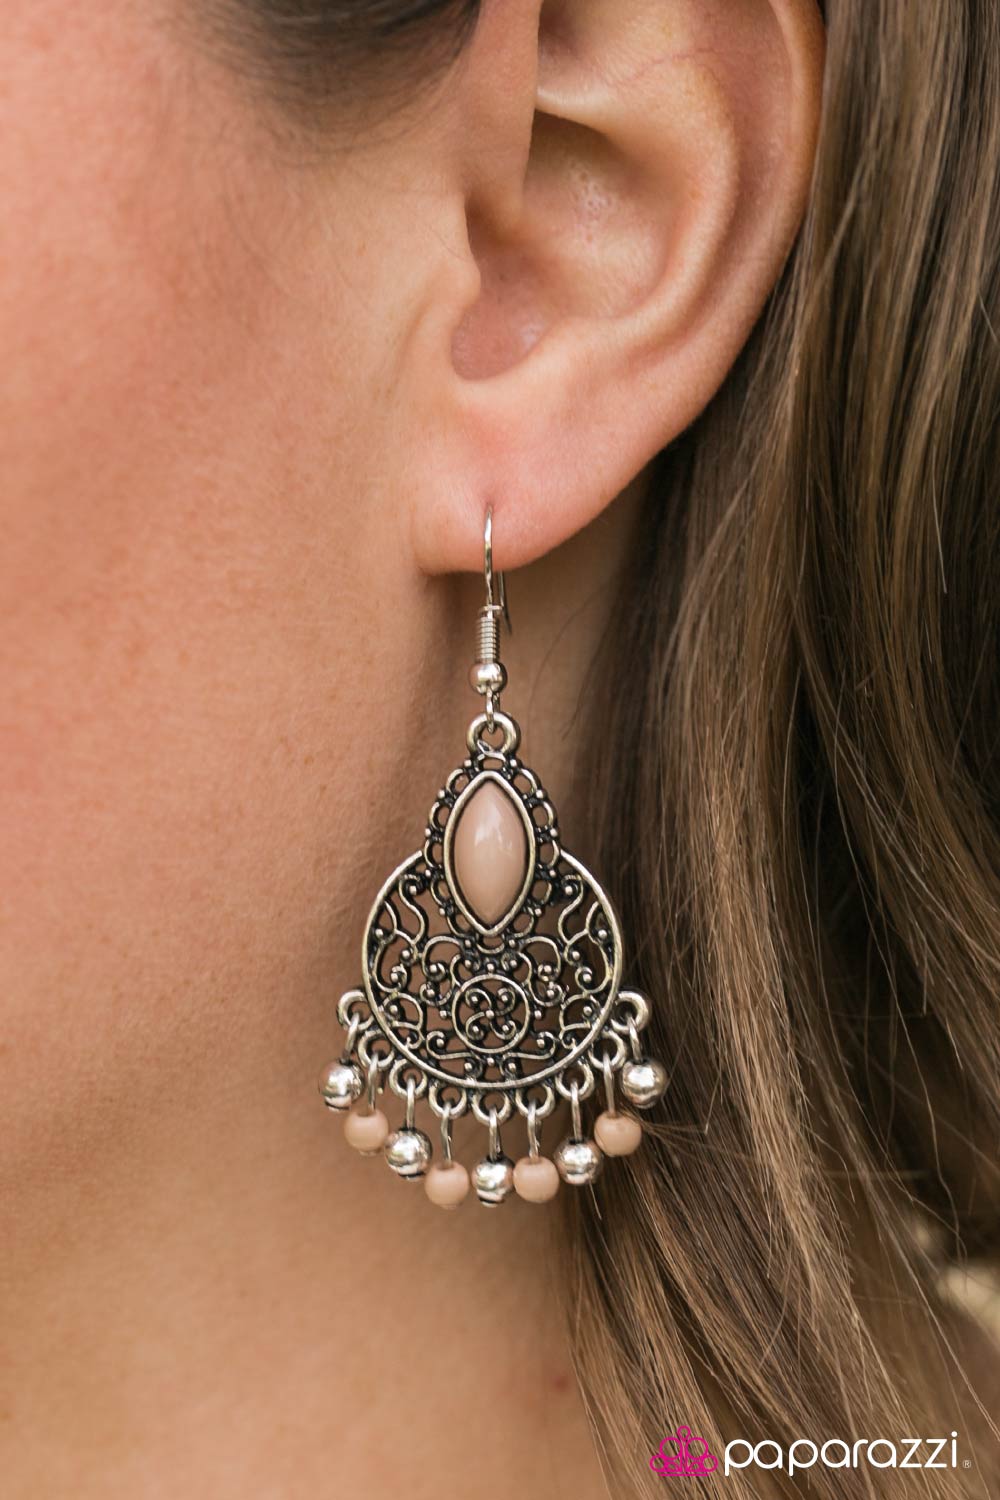 Scuba in Aruba - brown - Paparazzi earrings